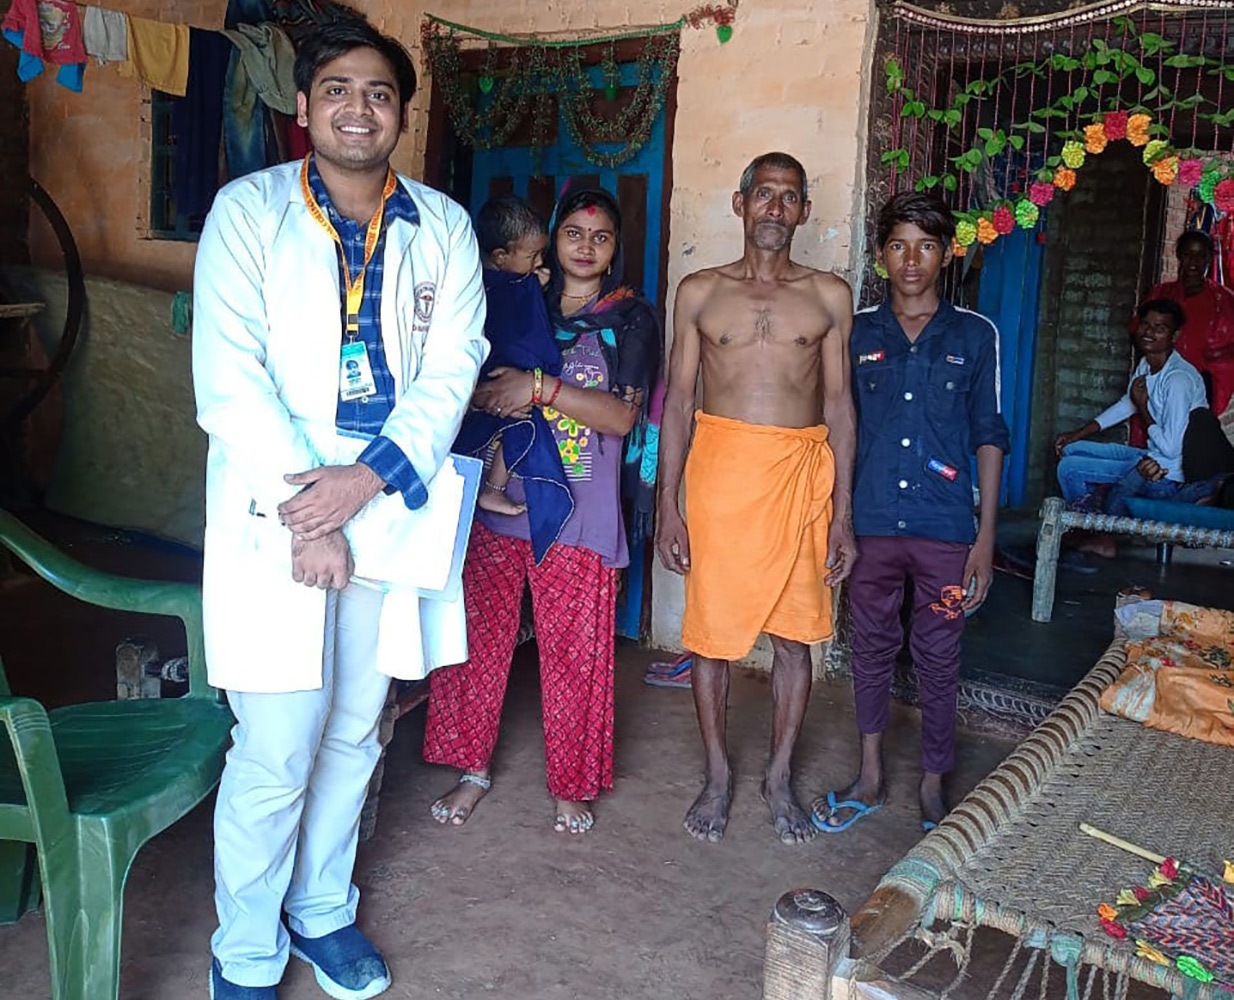 A free Medical Health Check-Up Camp by Naraina medical college